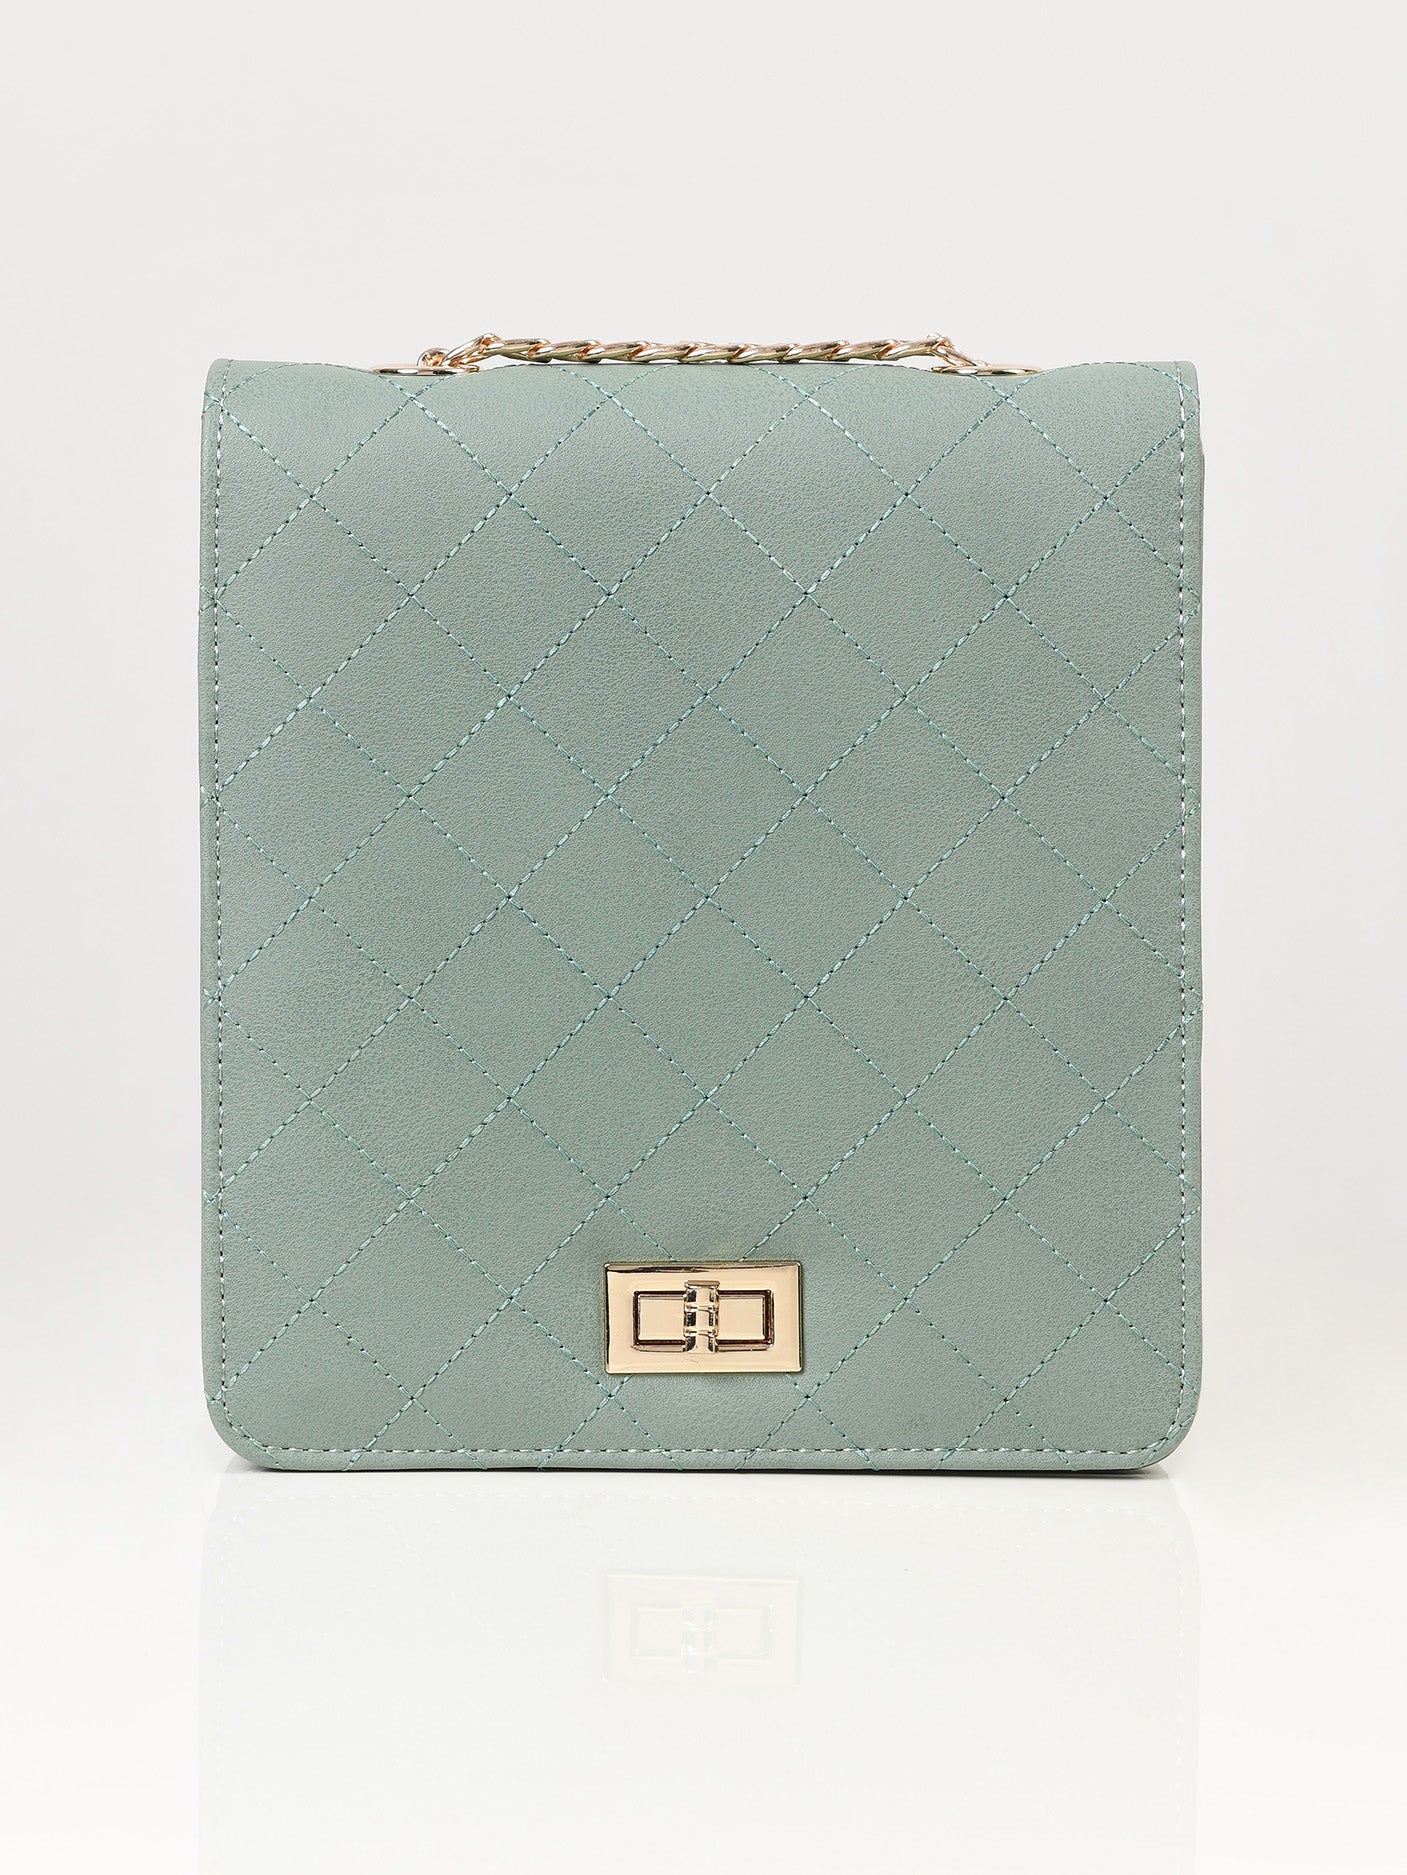 Quilt Design Handbag